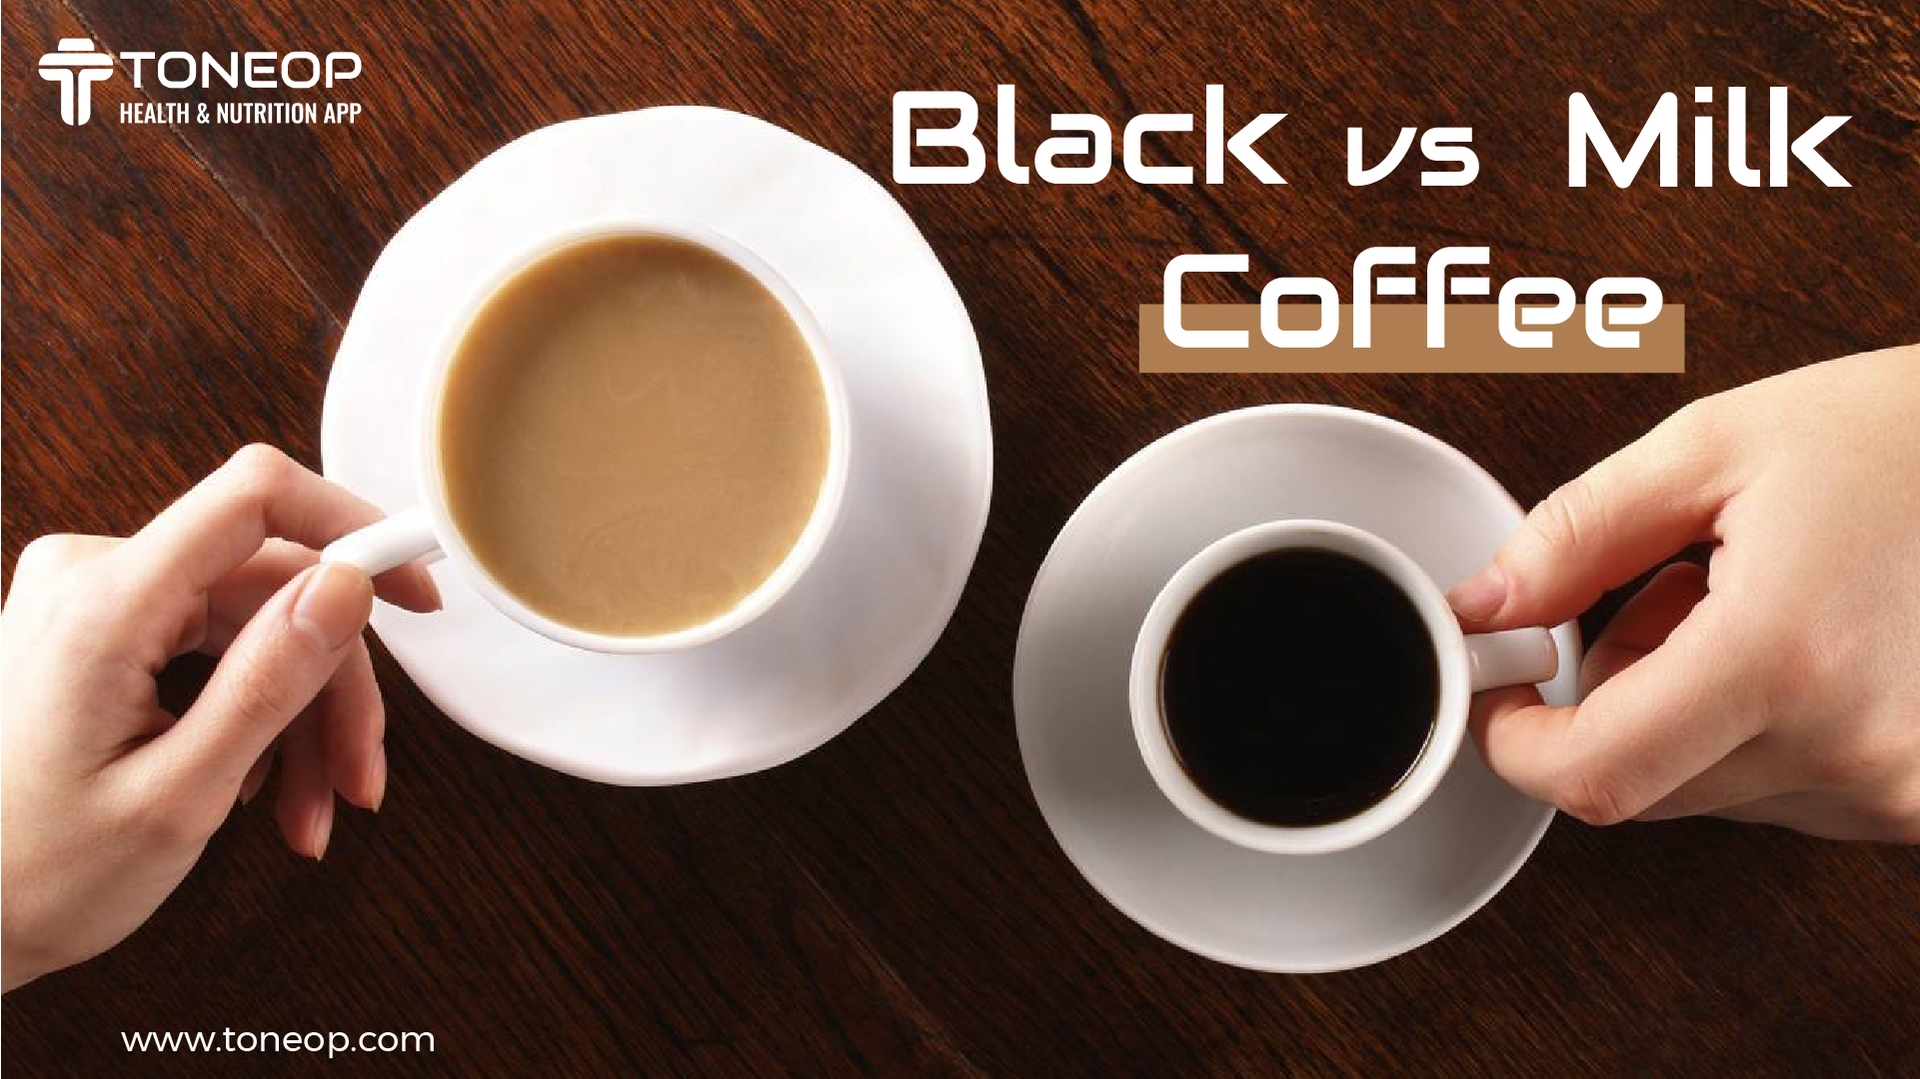 Black Coffee Vs. Milk Coffee